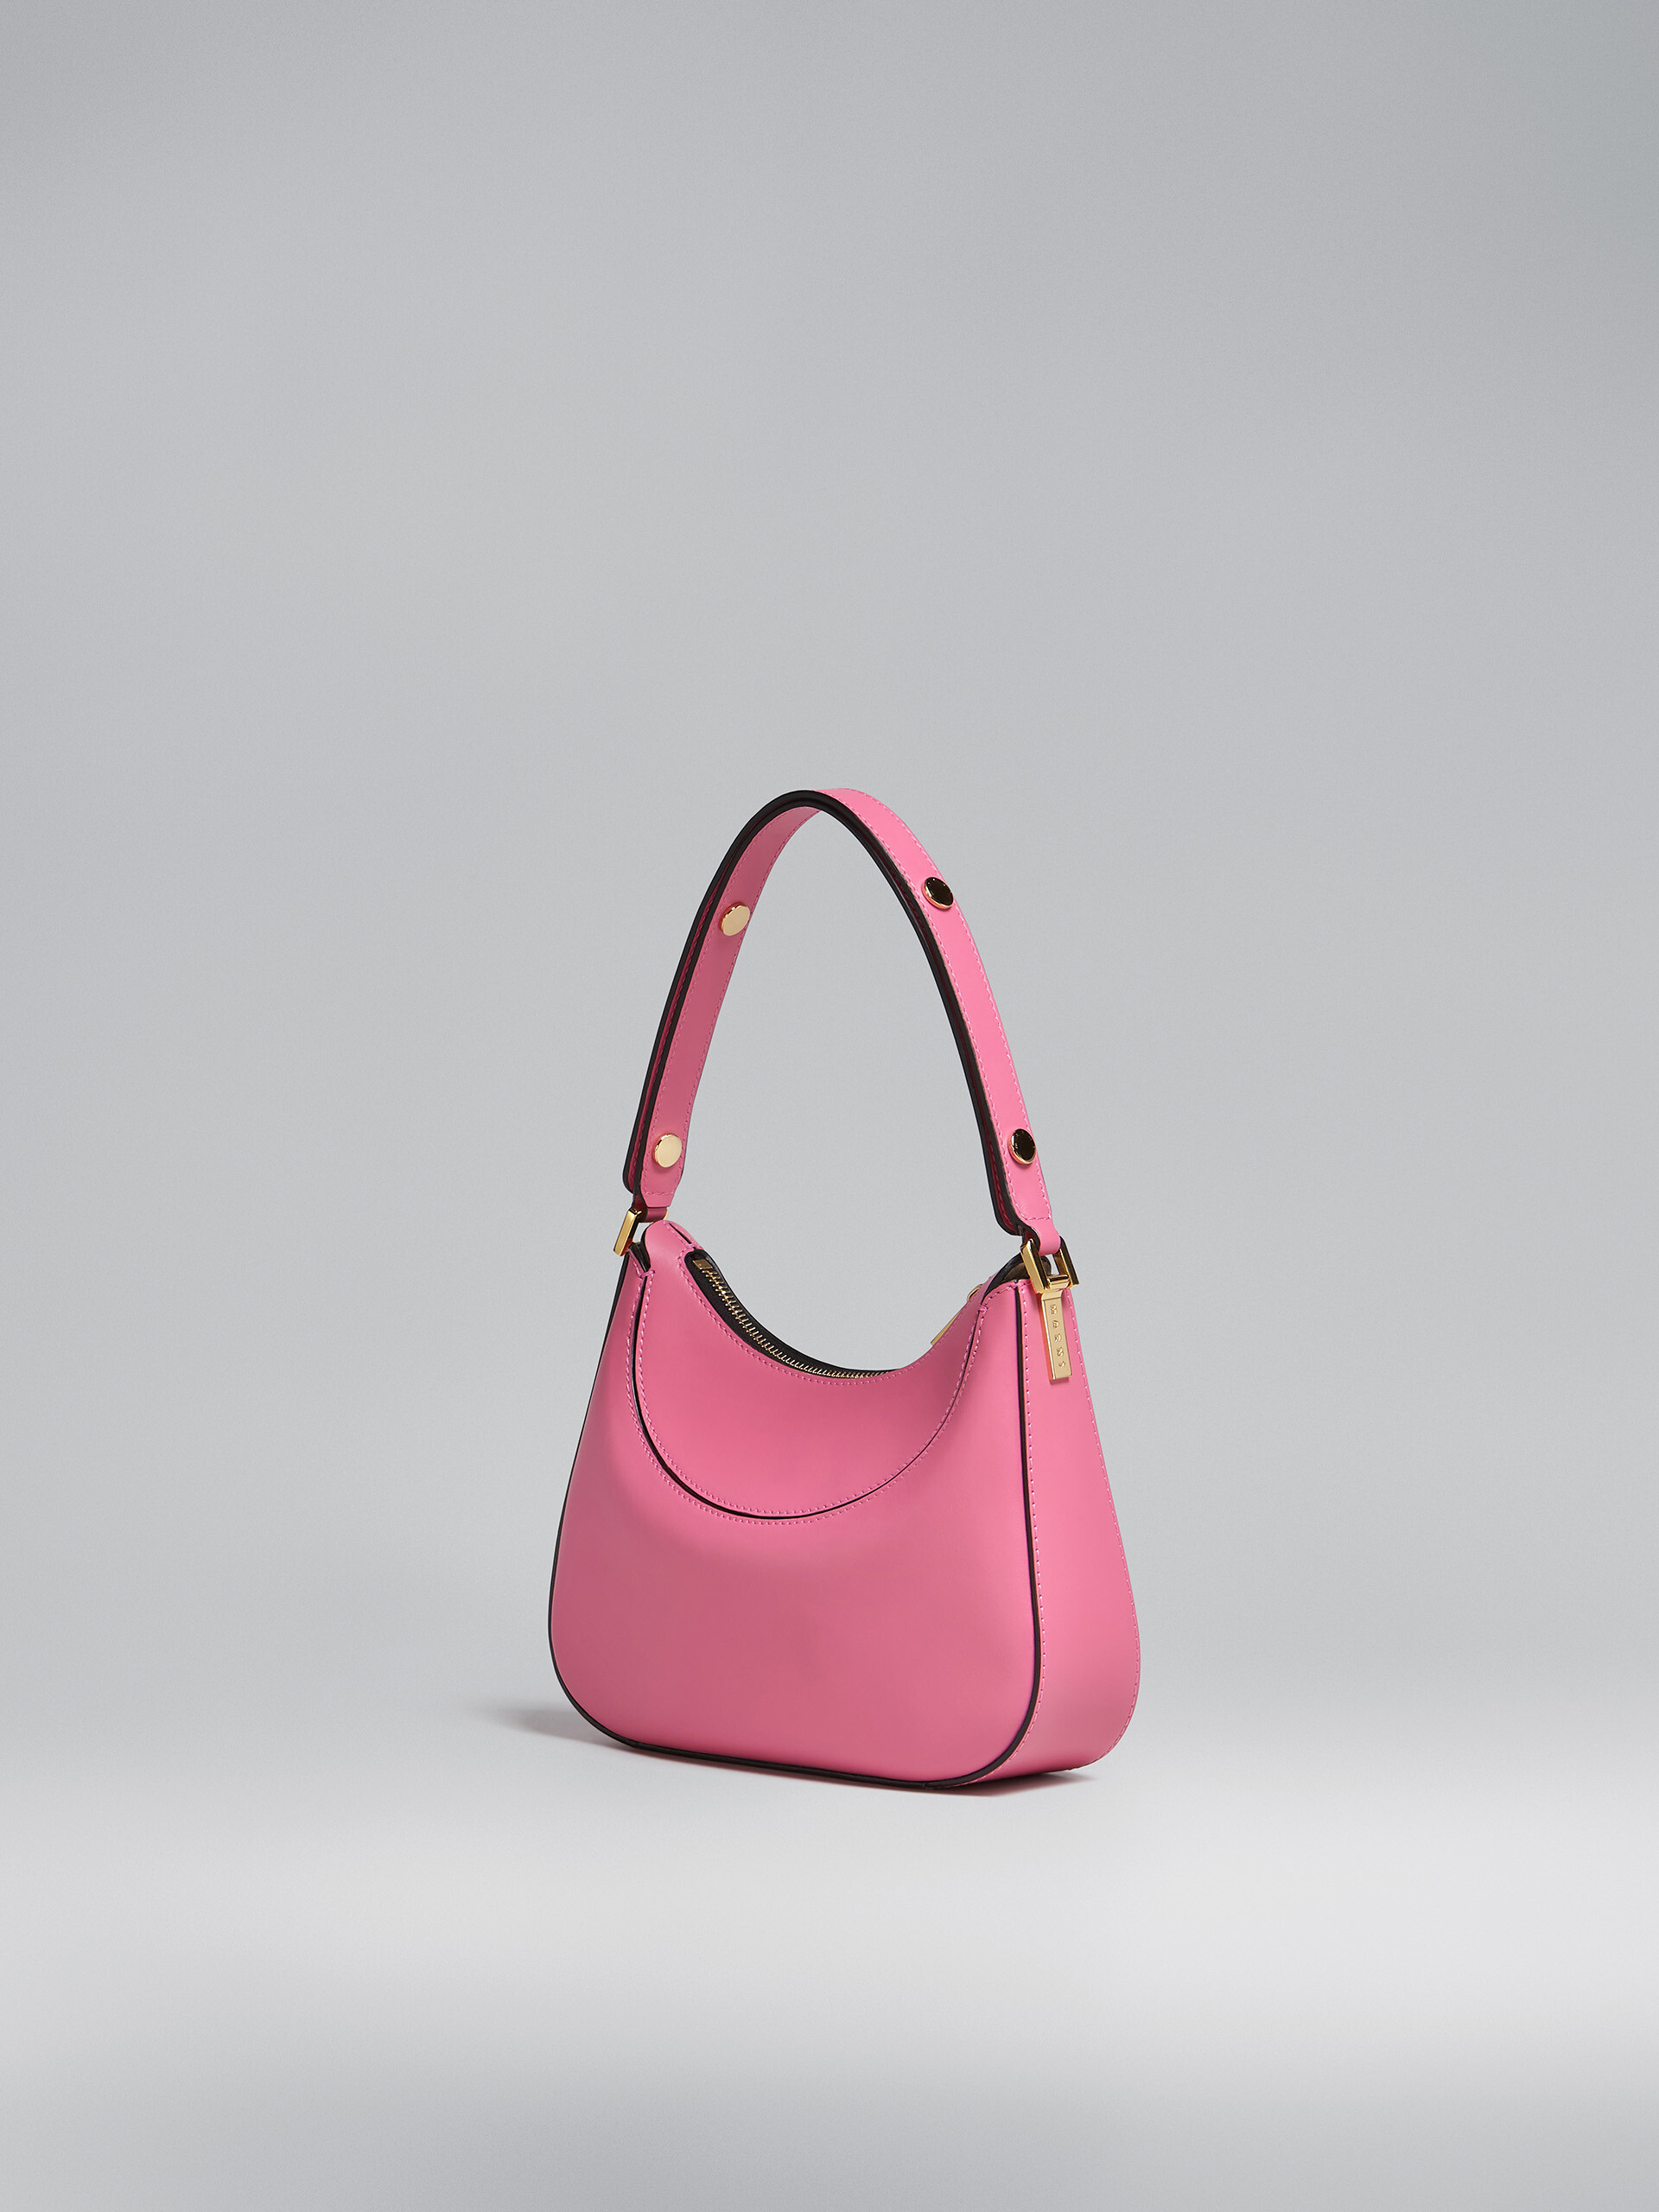 Milano mini bag in pink leather - Handbag - Image 3